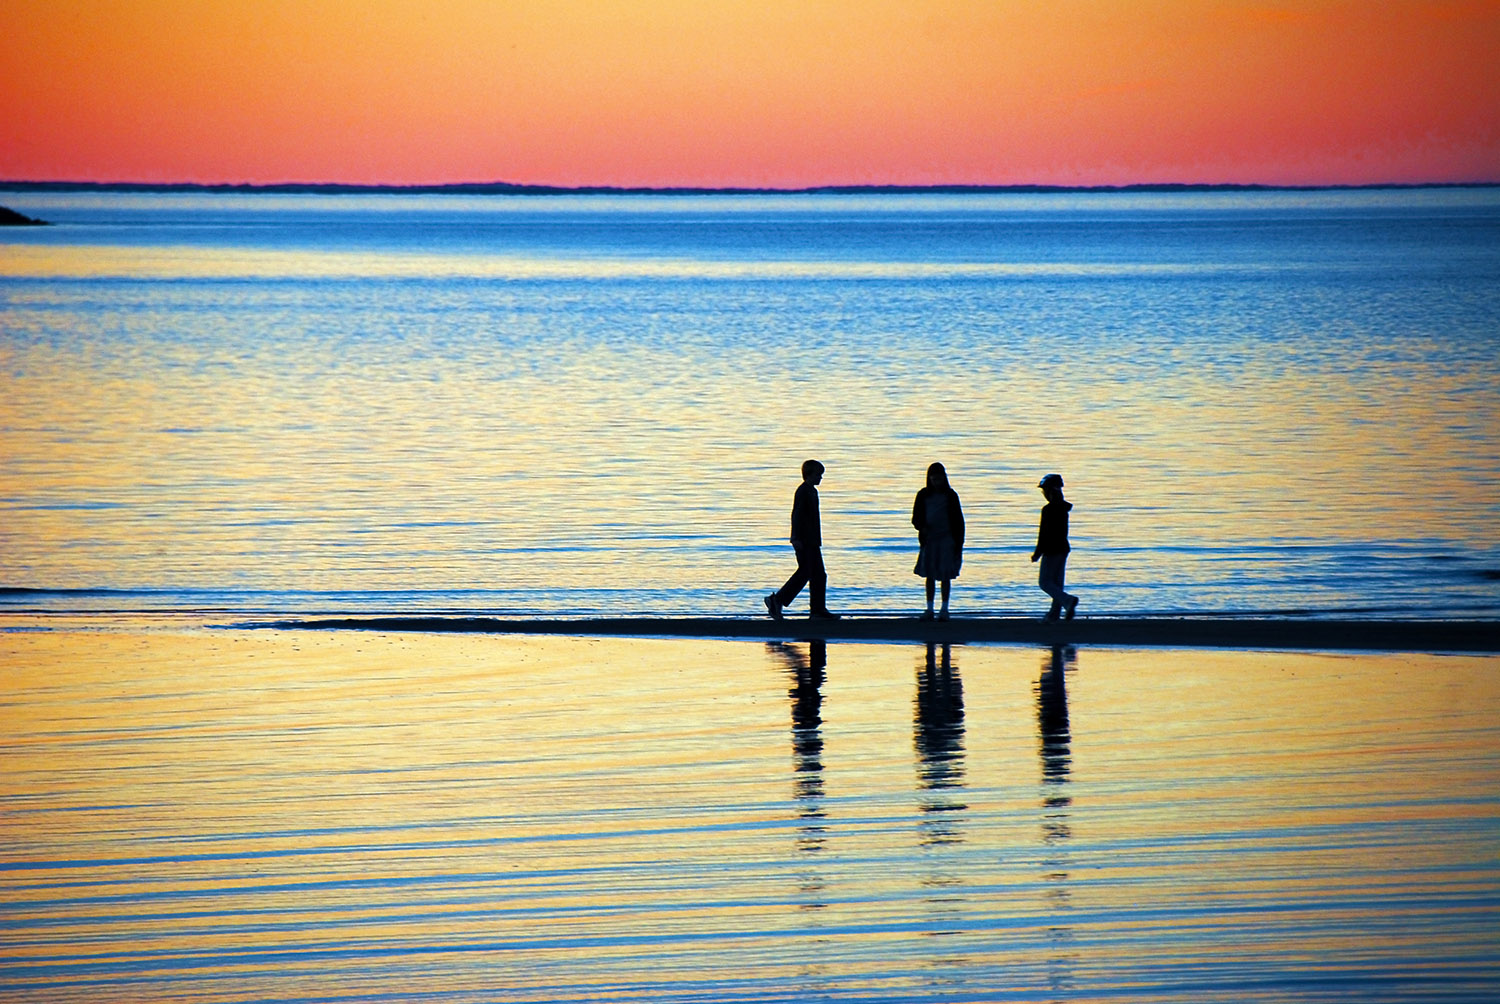 Cape_Henlopen_State_Park_Children_Kids_Calm_Water_Sunset_Silhouettes.jpg